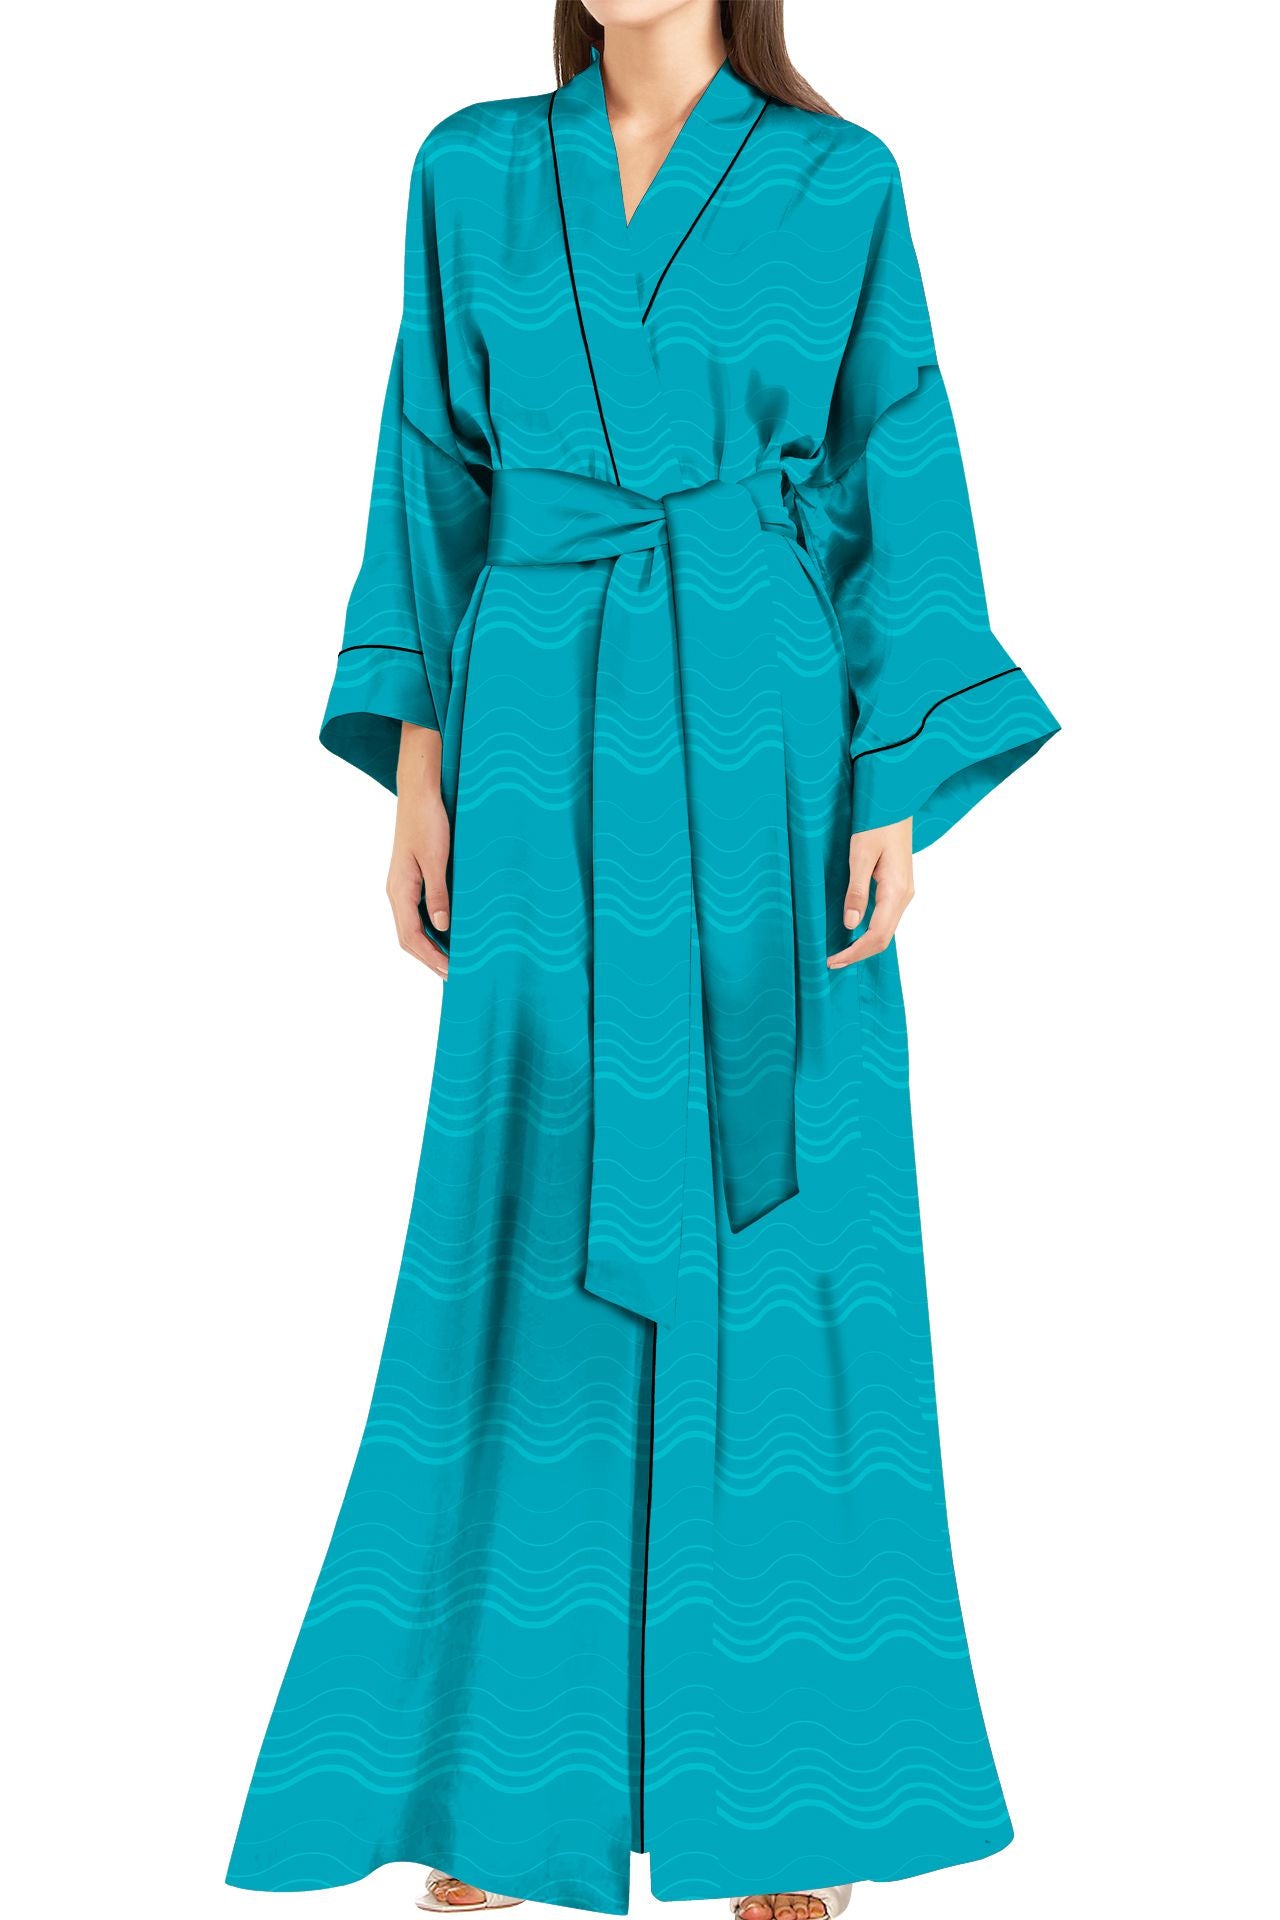 "silk kimono robe womens" "cute kimonos" "light blue silk robe" "Kyle X Shahida"